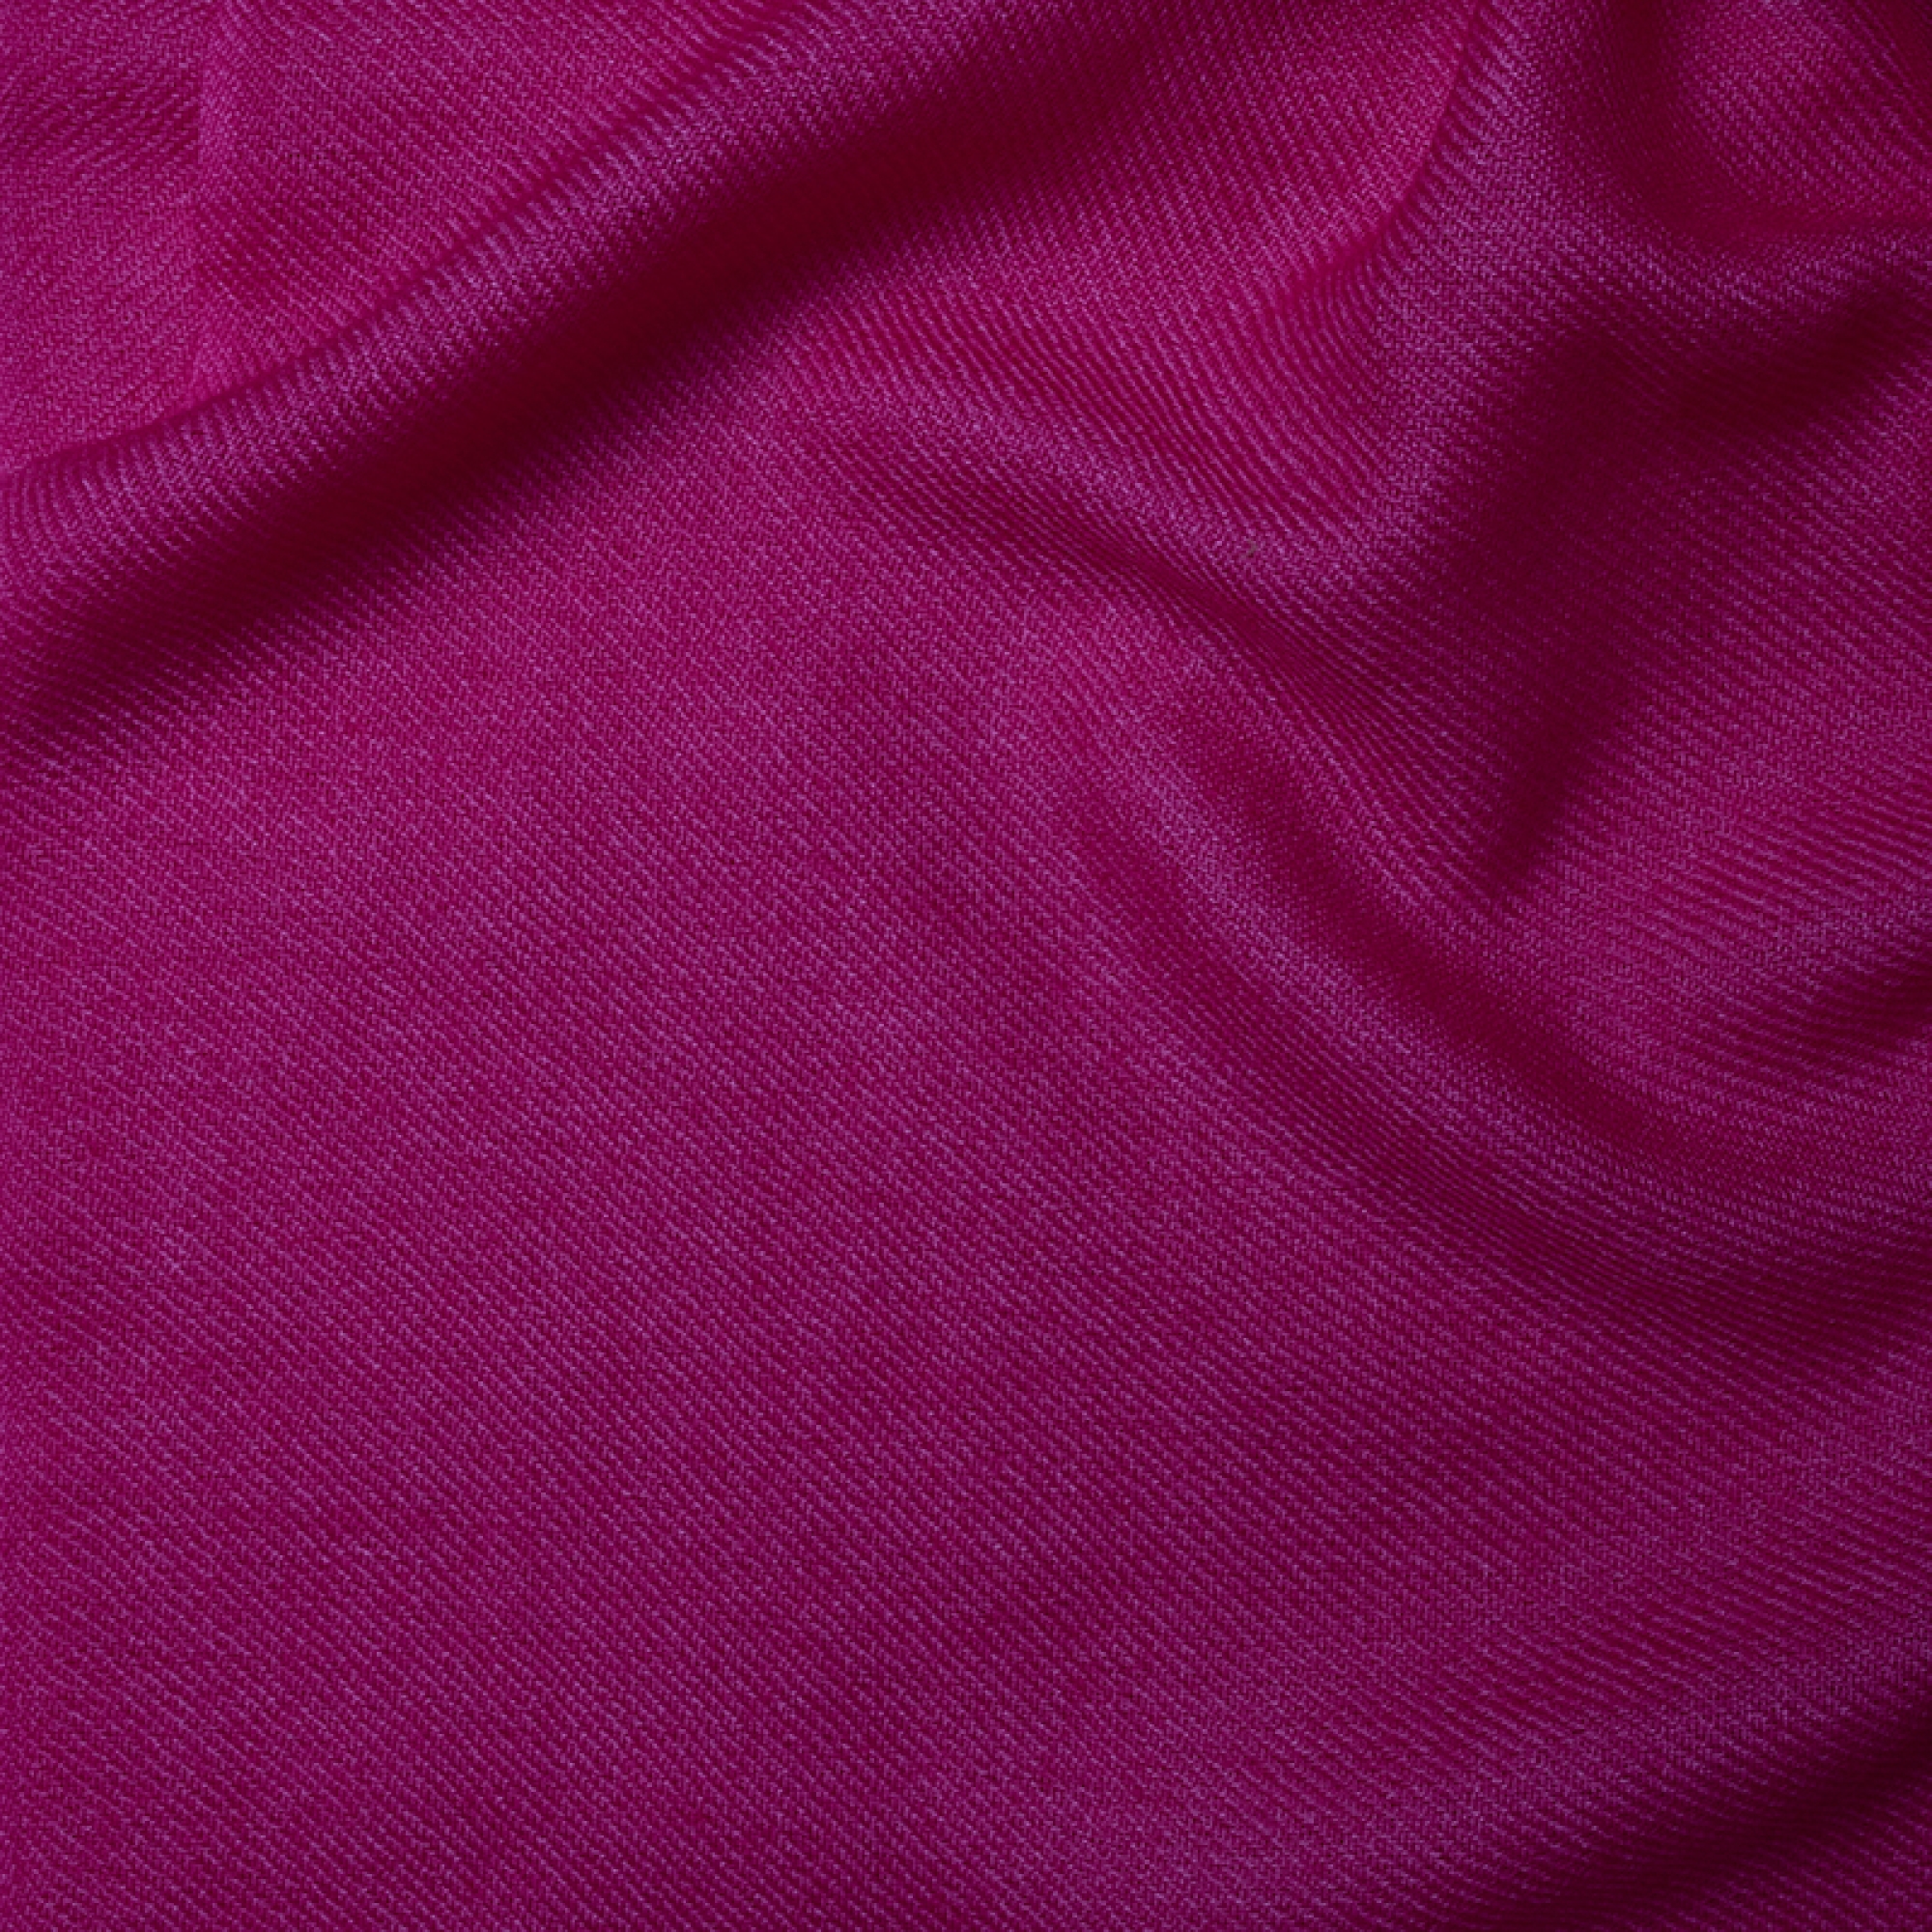 Cashmere accessories blanket toodoo plain s 140 x 200 flashing pink 140 x 200 cm